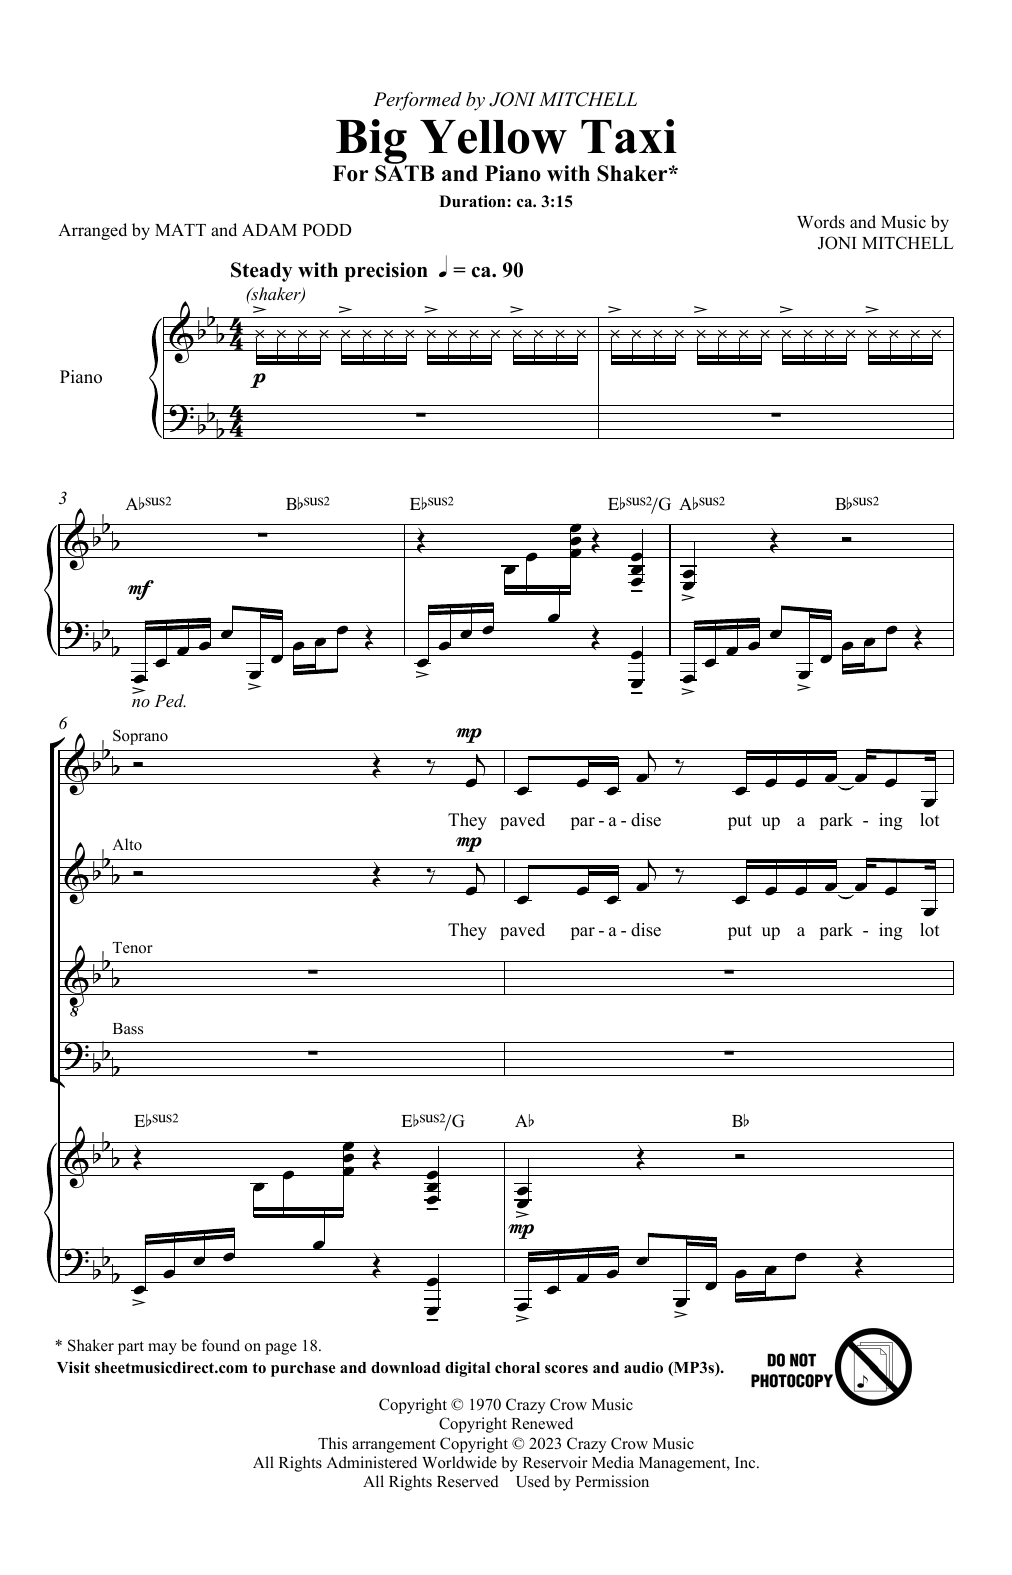 Joni Mitchell Big Yellow Taxi (arr. Adam and Matt Podd) Sheet Music Notes & Chords for SATB Choir - Download or Print PDF